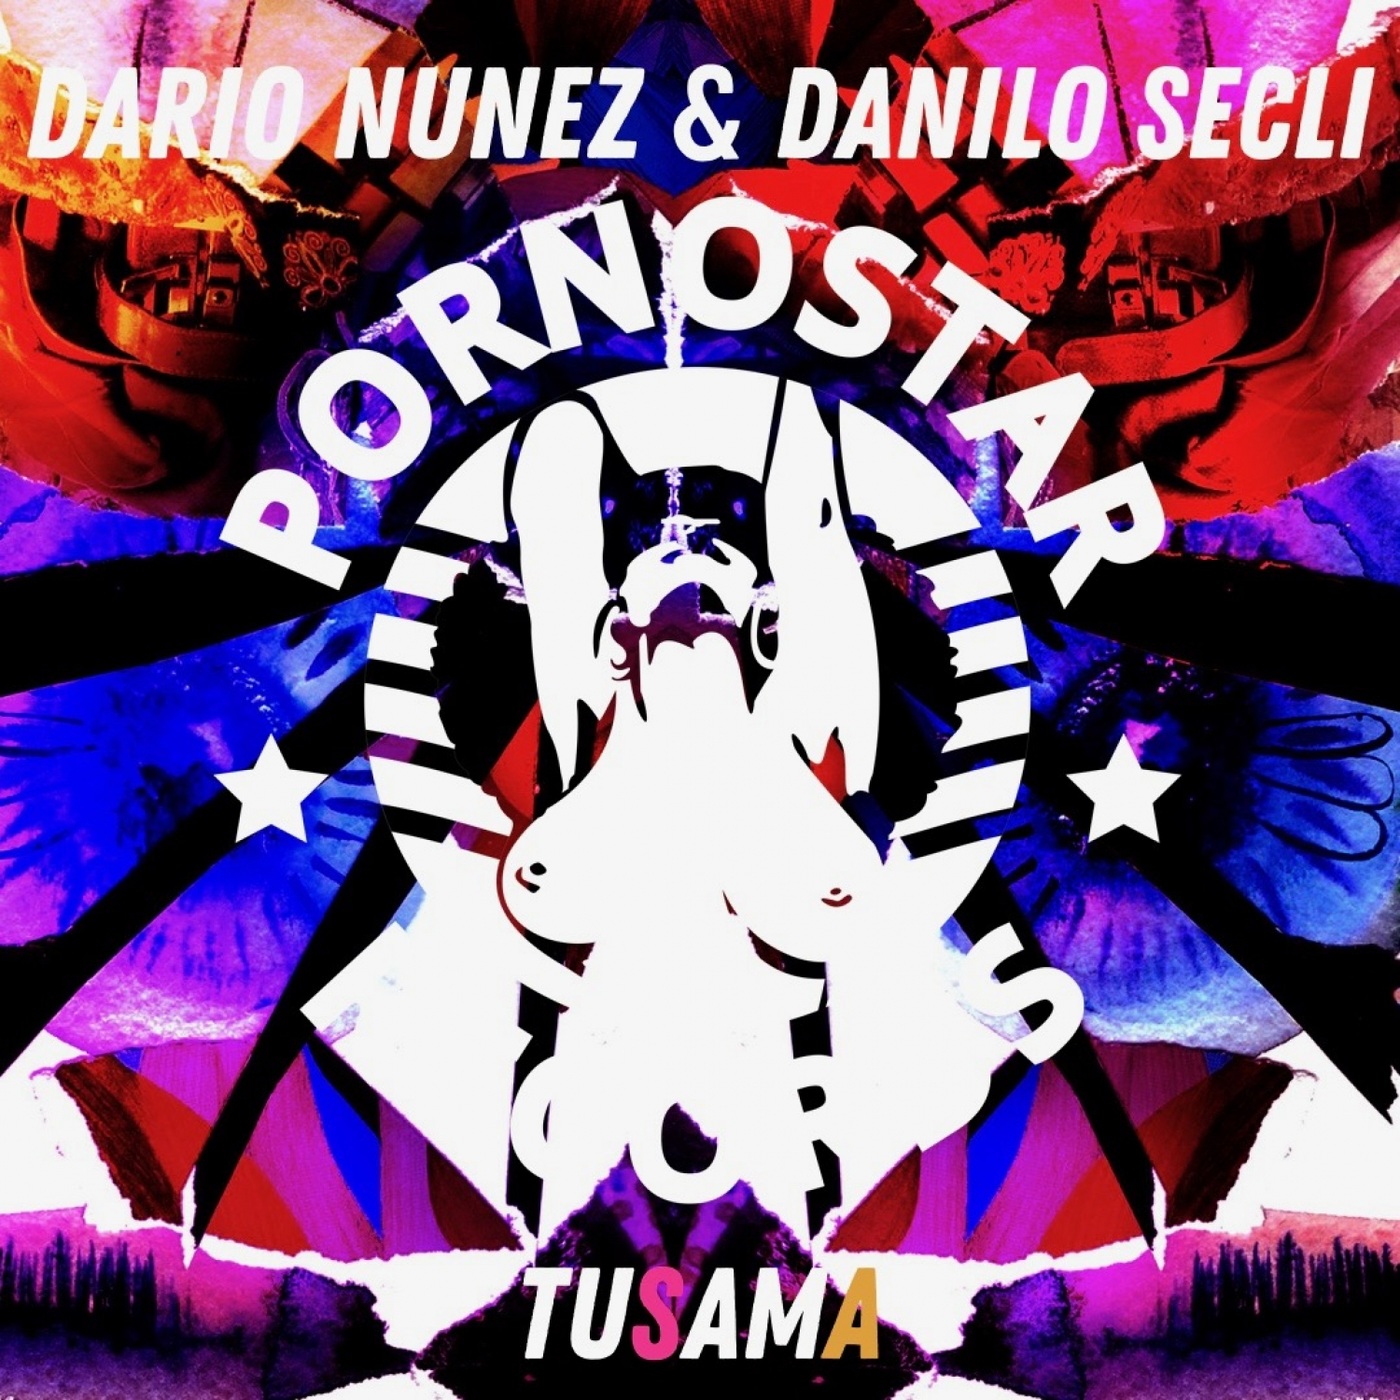 Dario Nunez & Danilo Seclì - Tusama / PornoStar Records